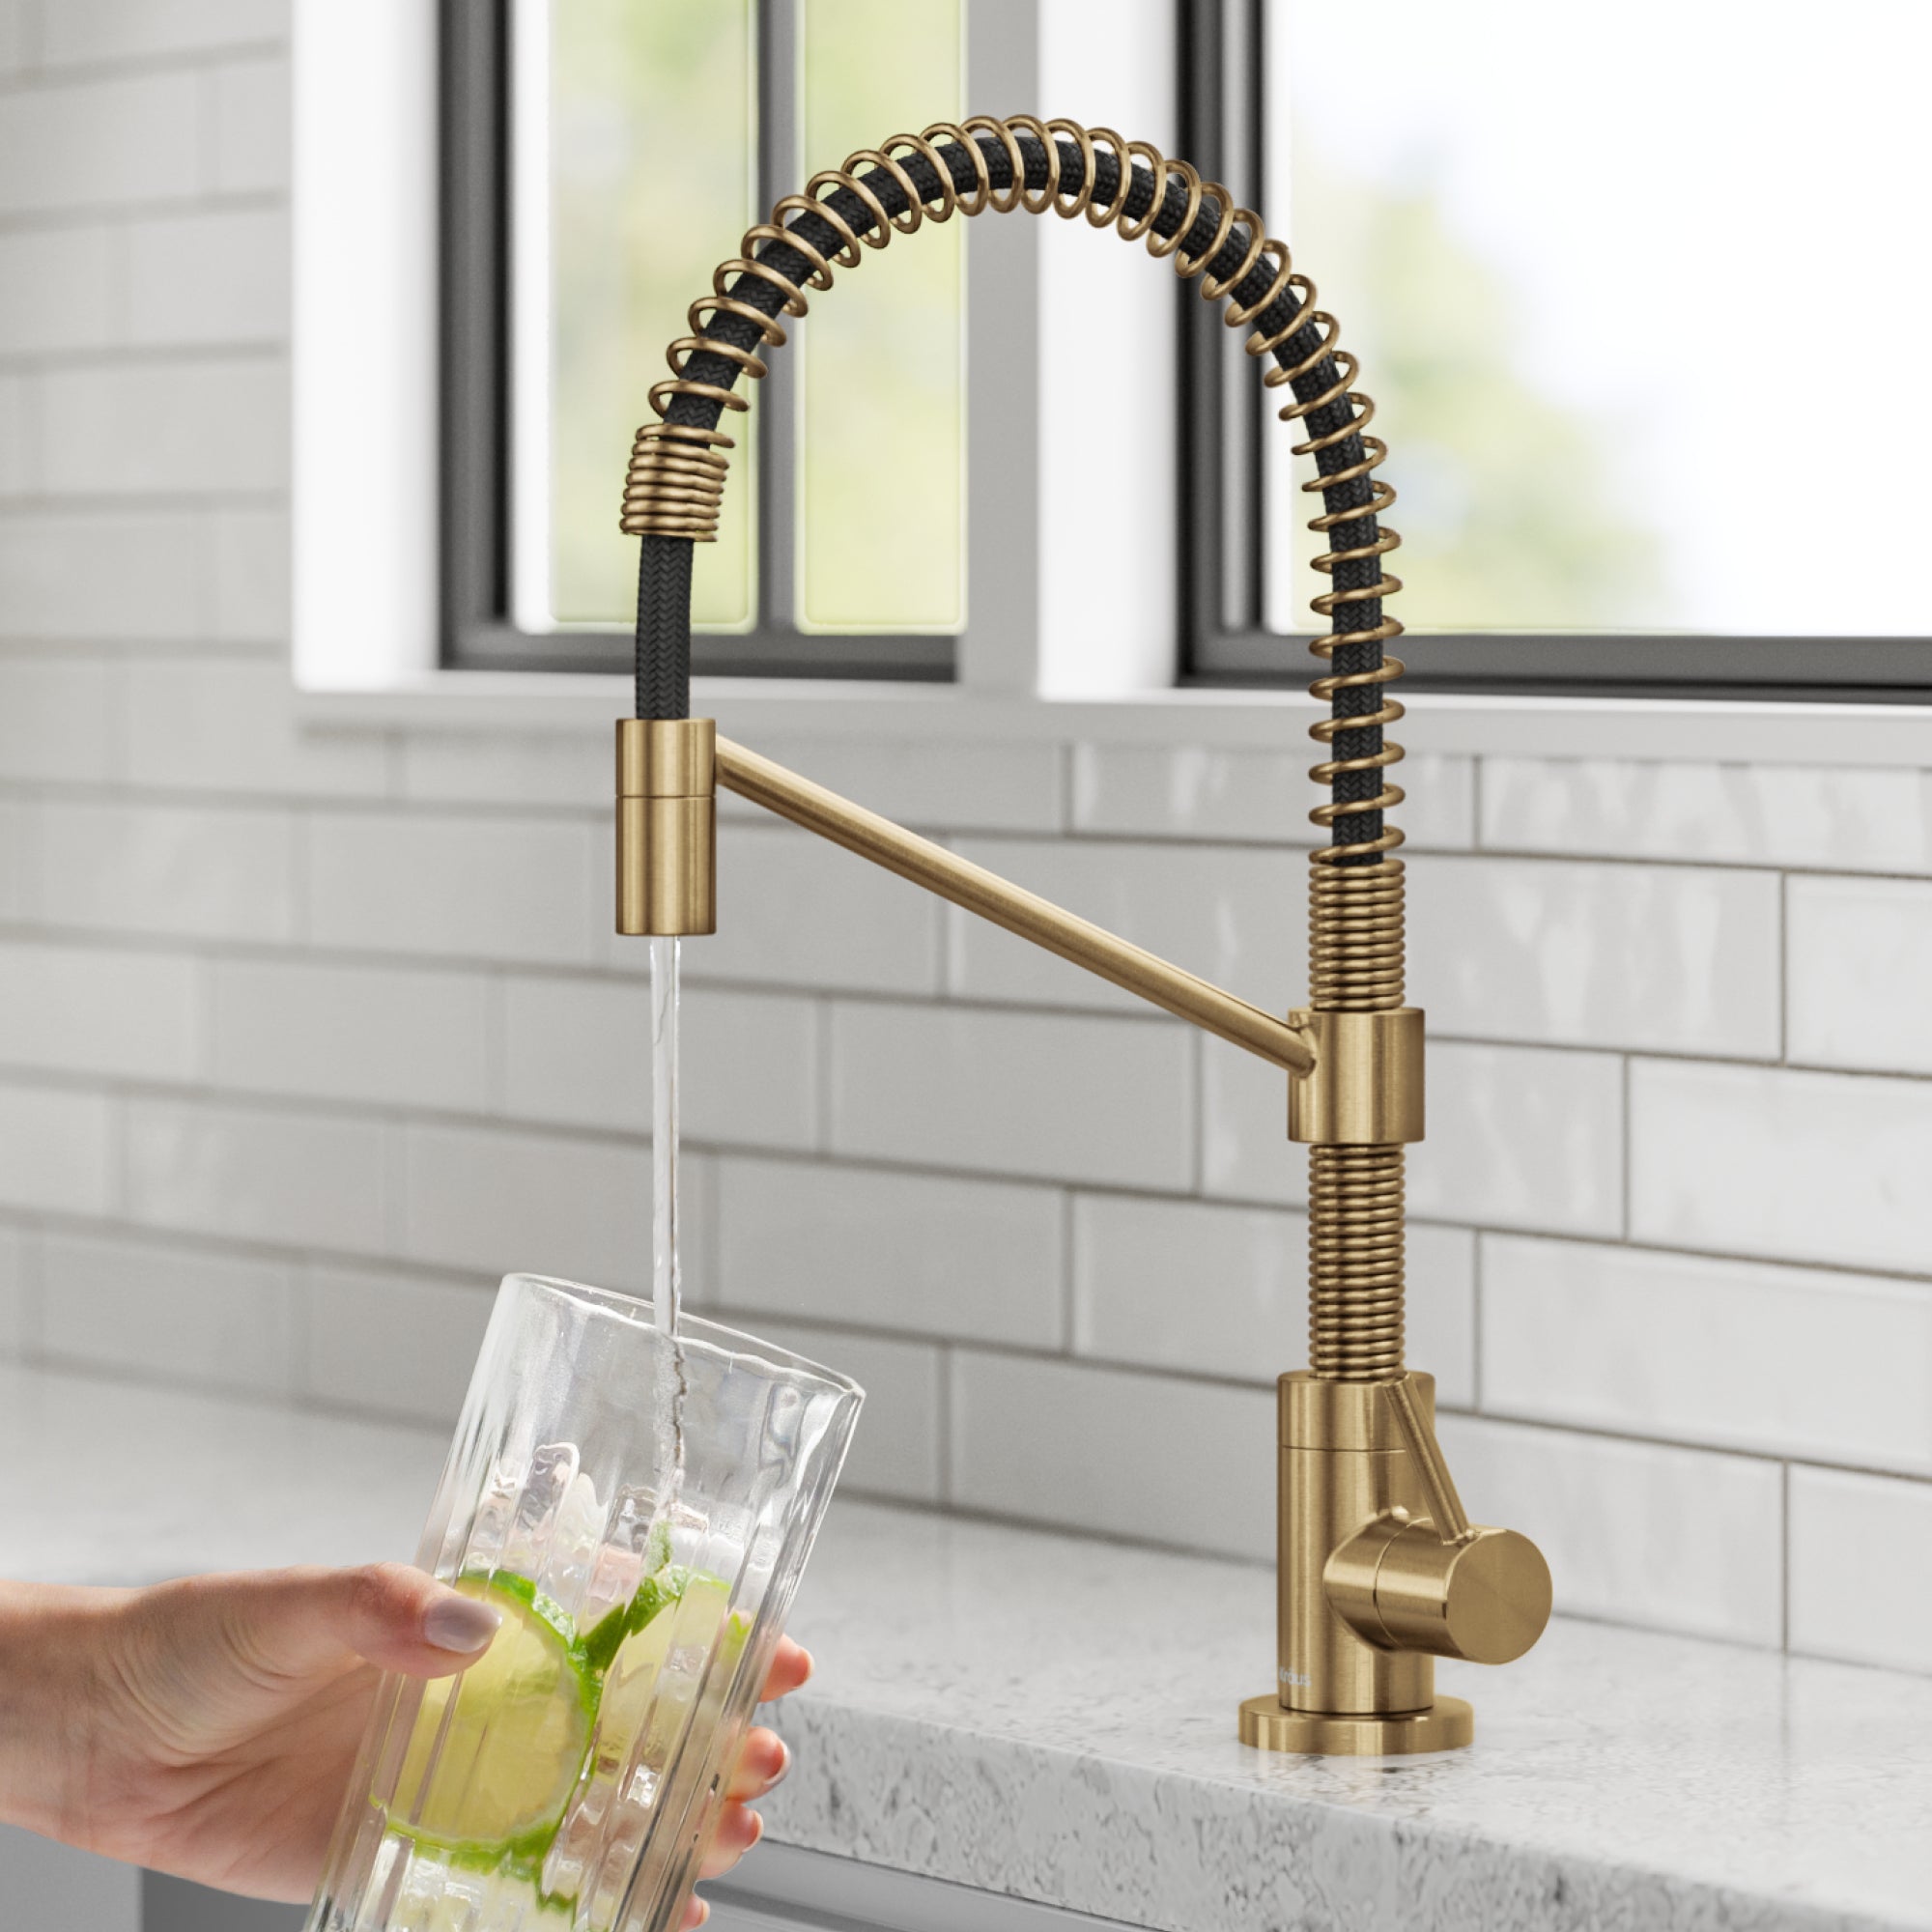 KRAUS Bolden Drinking Water Filter Faucet in Brushed Brass